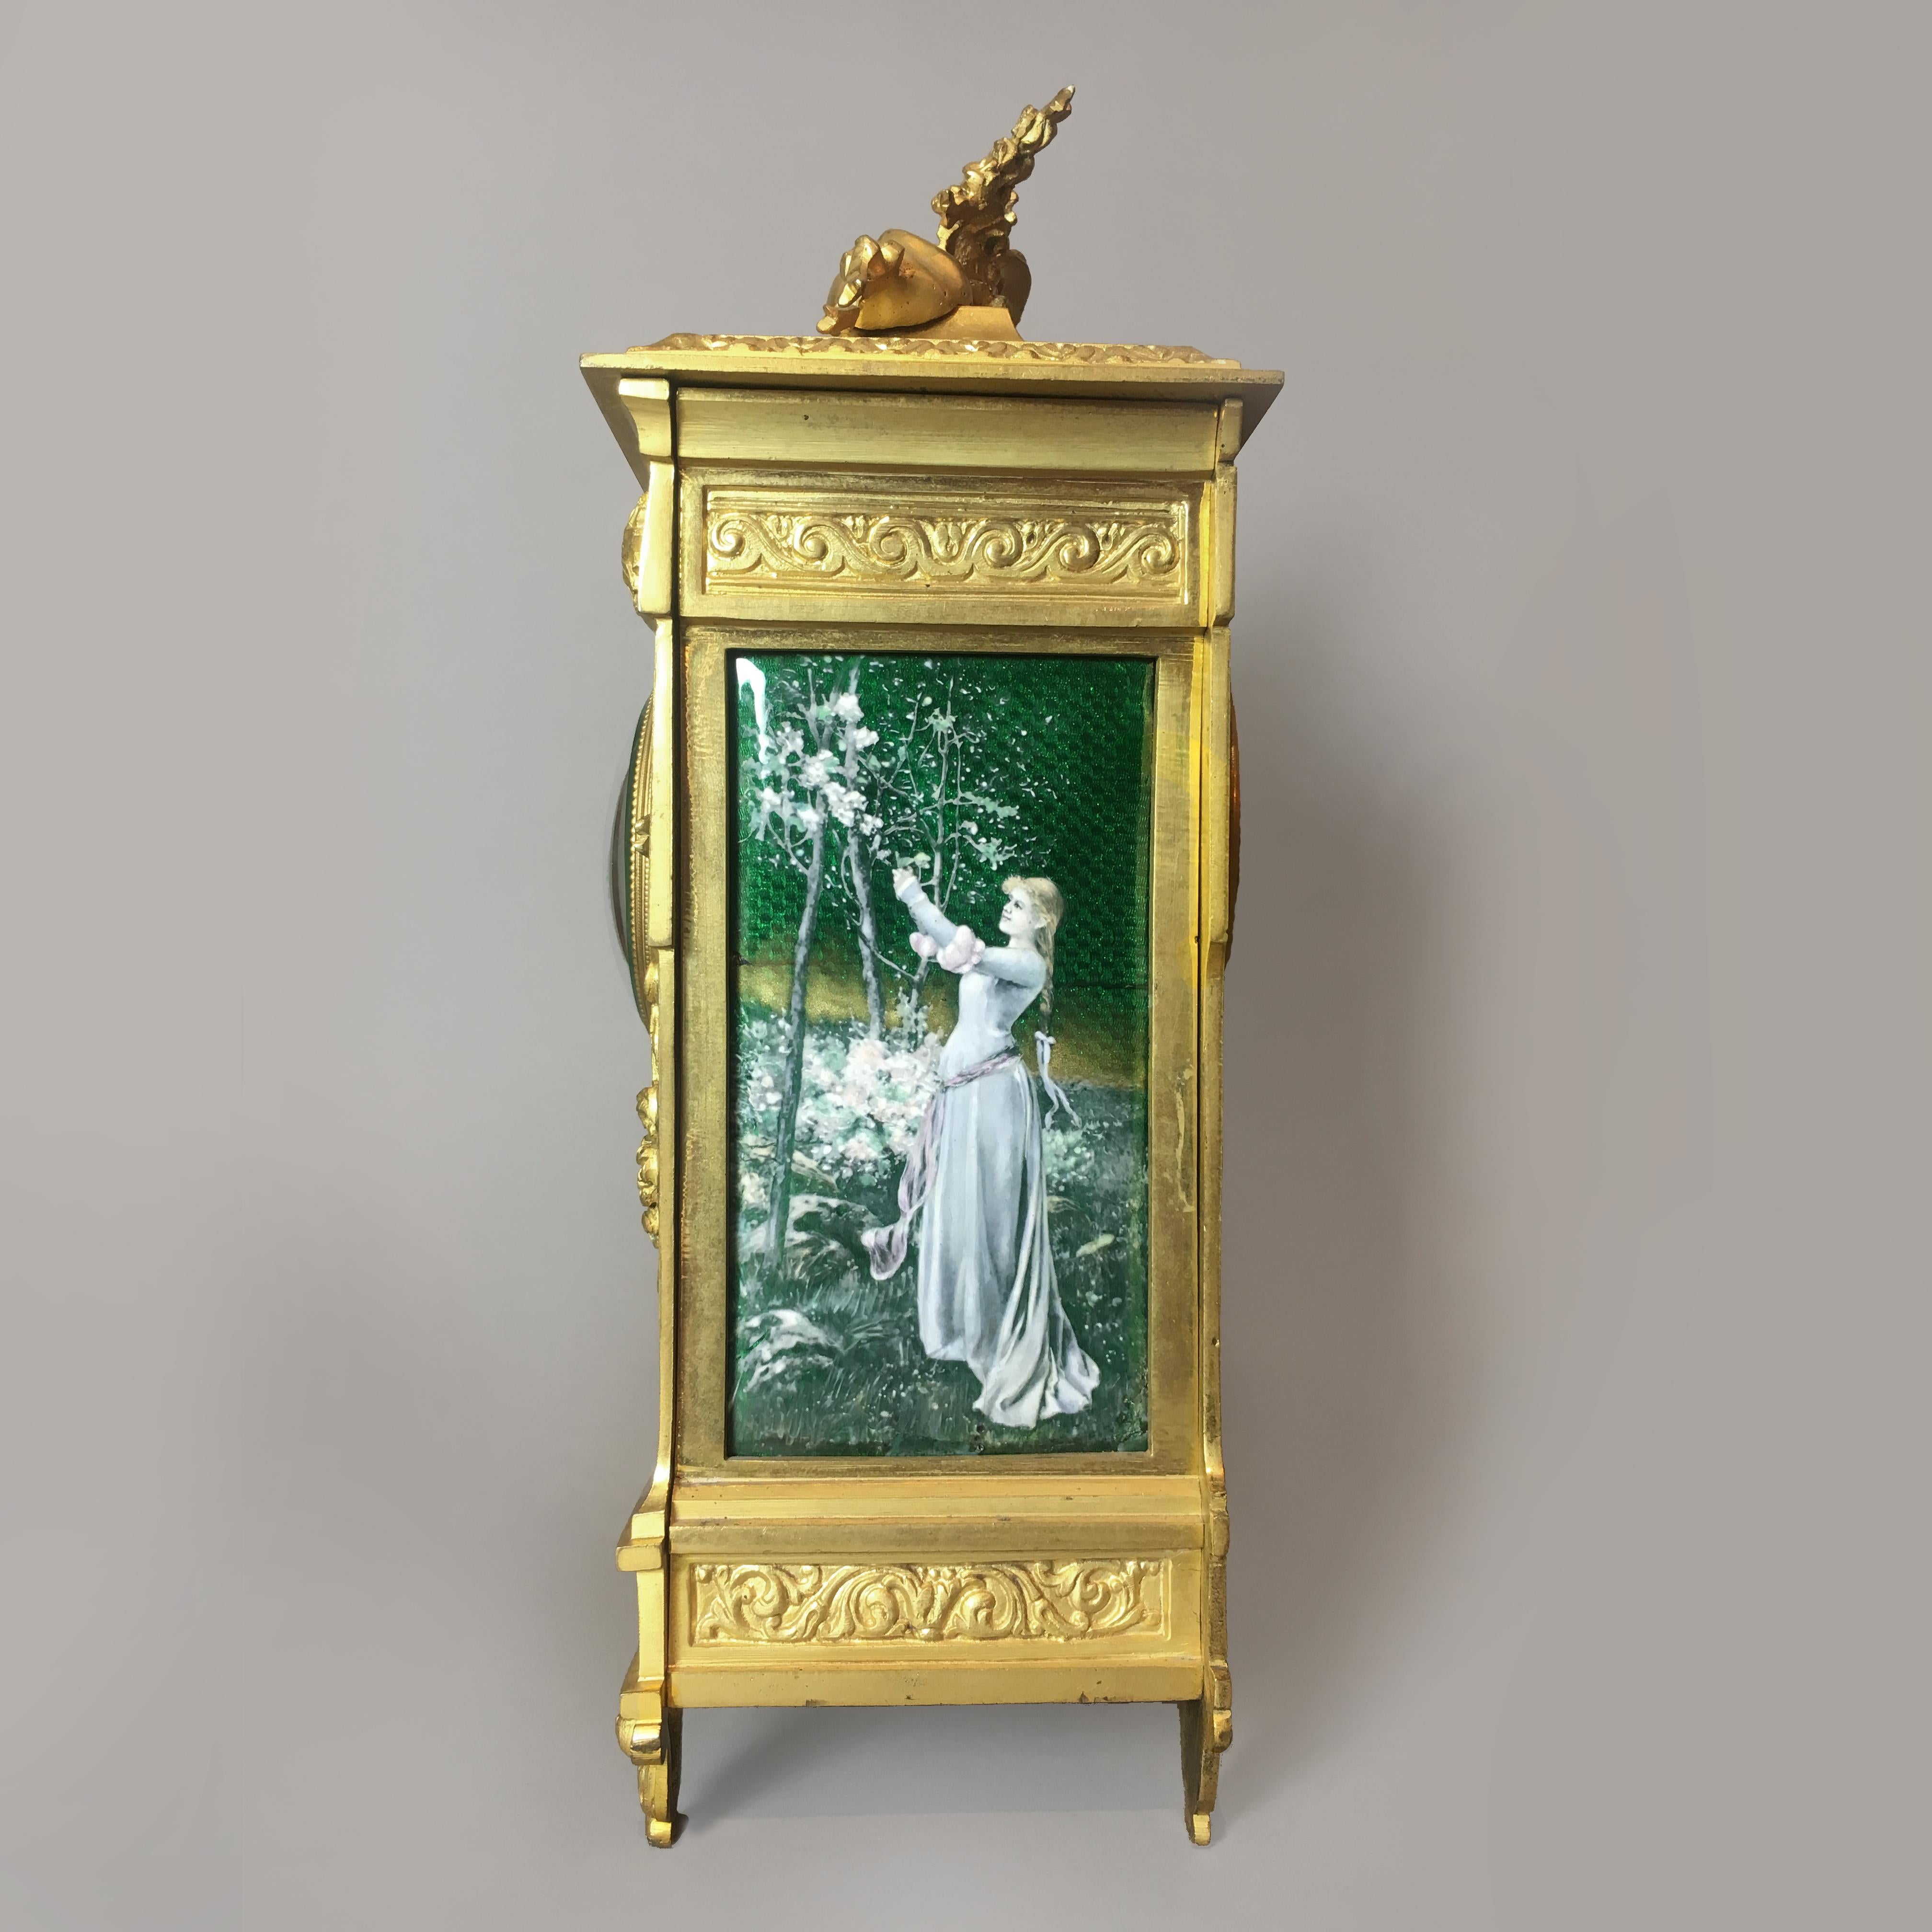 A Louis XVI Style Gilt-Bronze and Green Enamel Mantel Clock, Circa 1890 For Sale 1